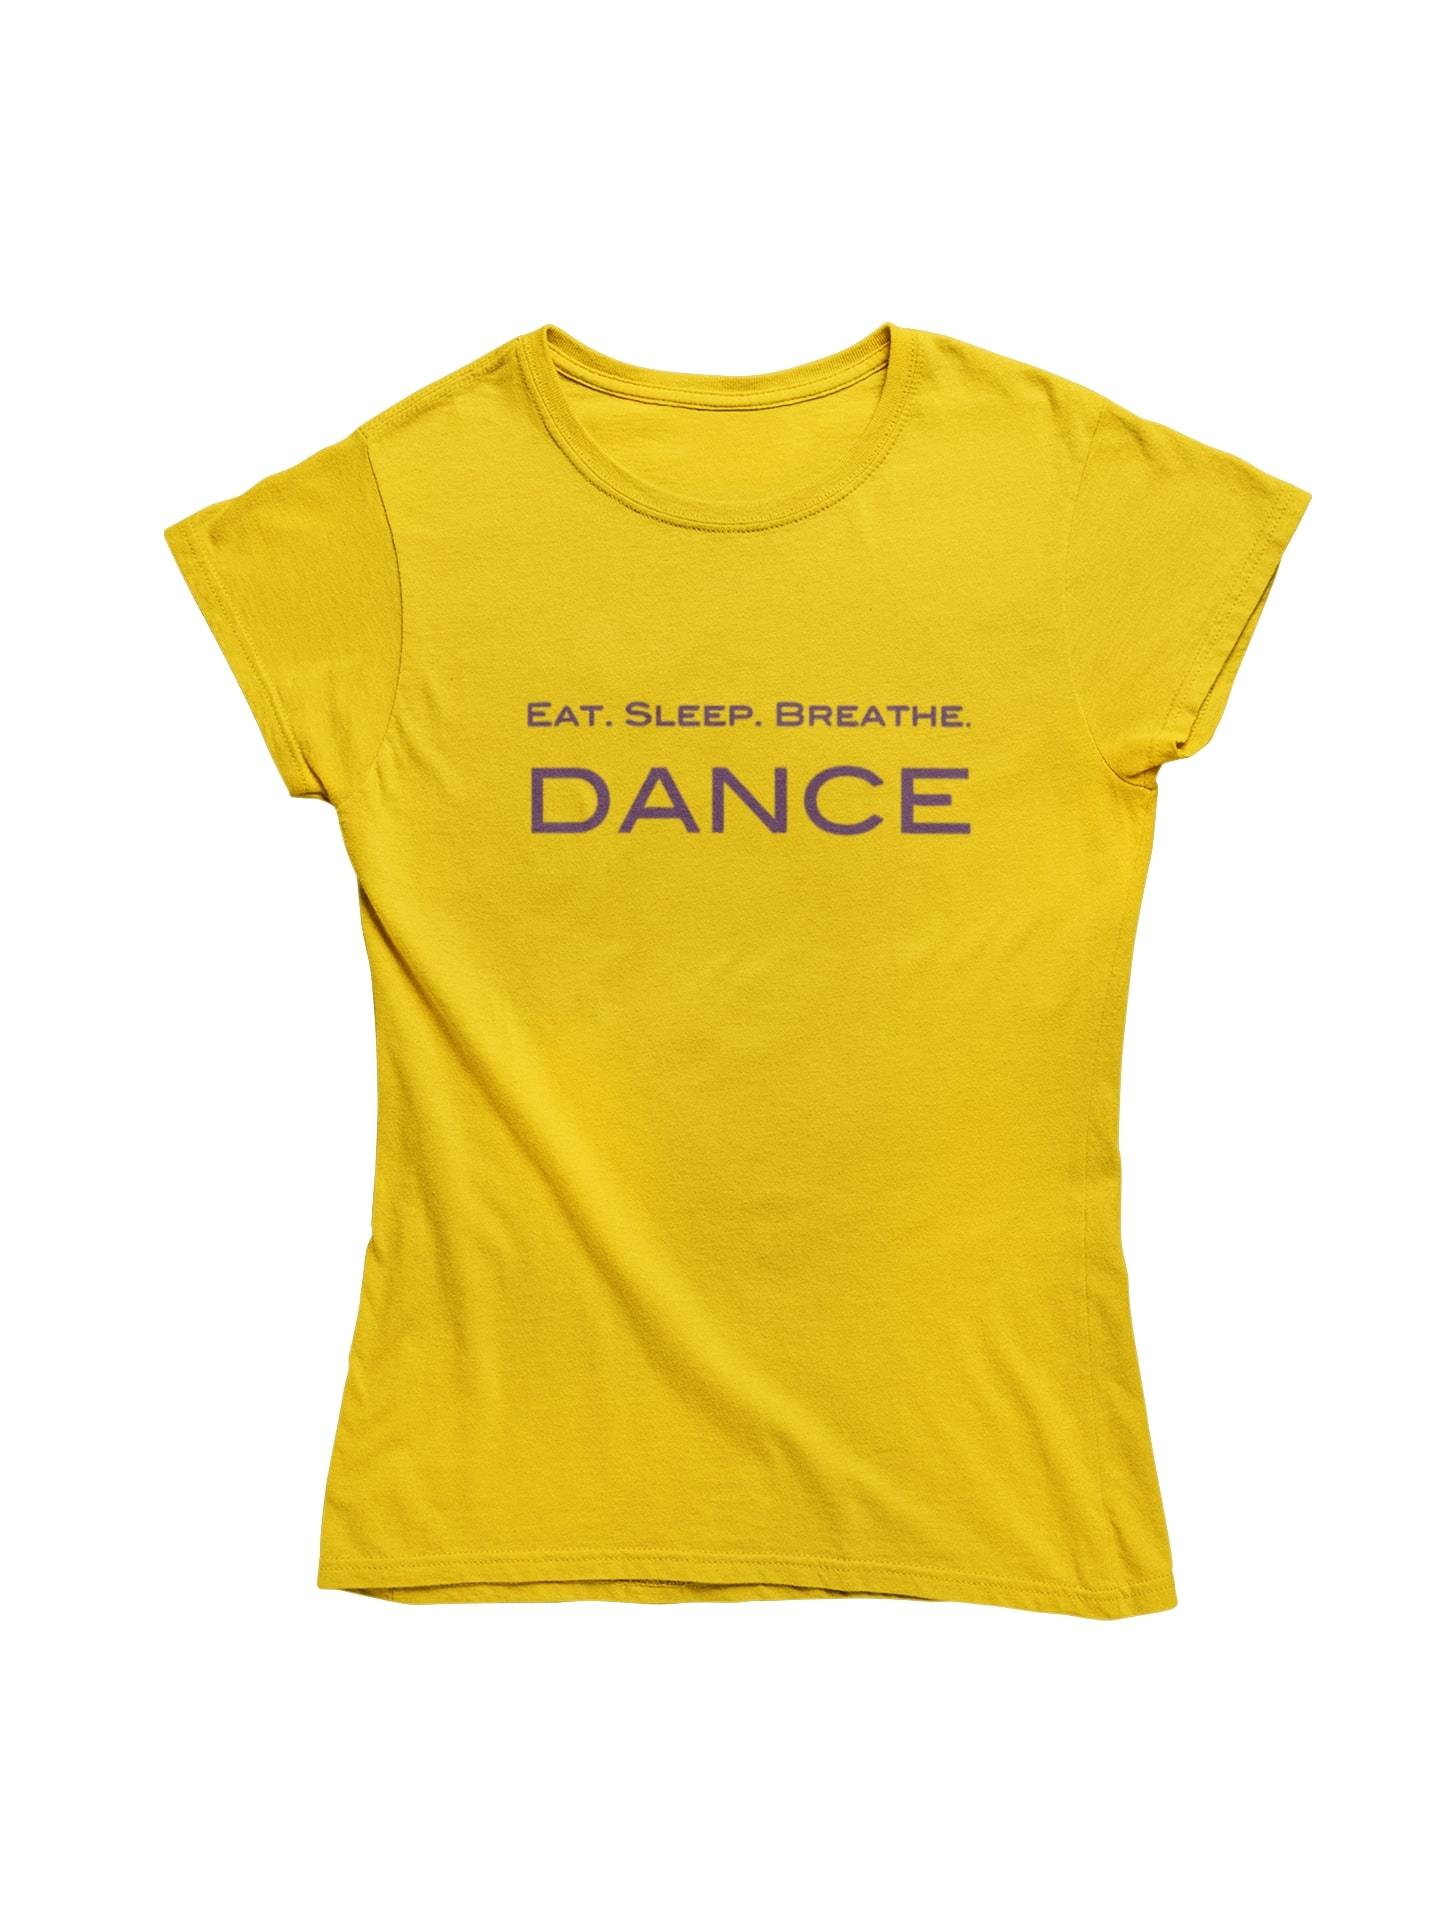 thelegalgang,Eat.Sleep.Breathe.Dance T shirt for Women,WOMEN.